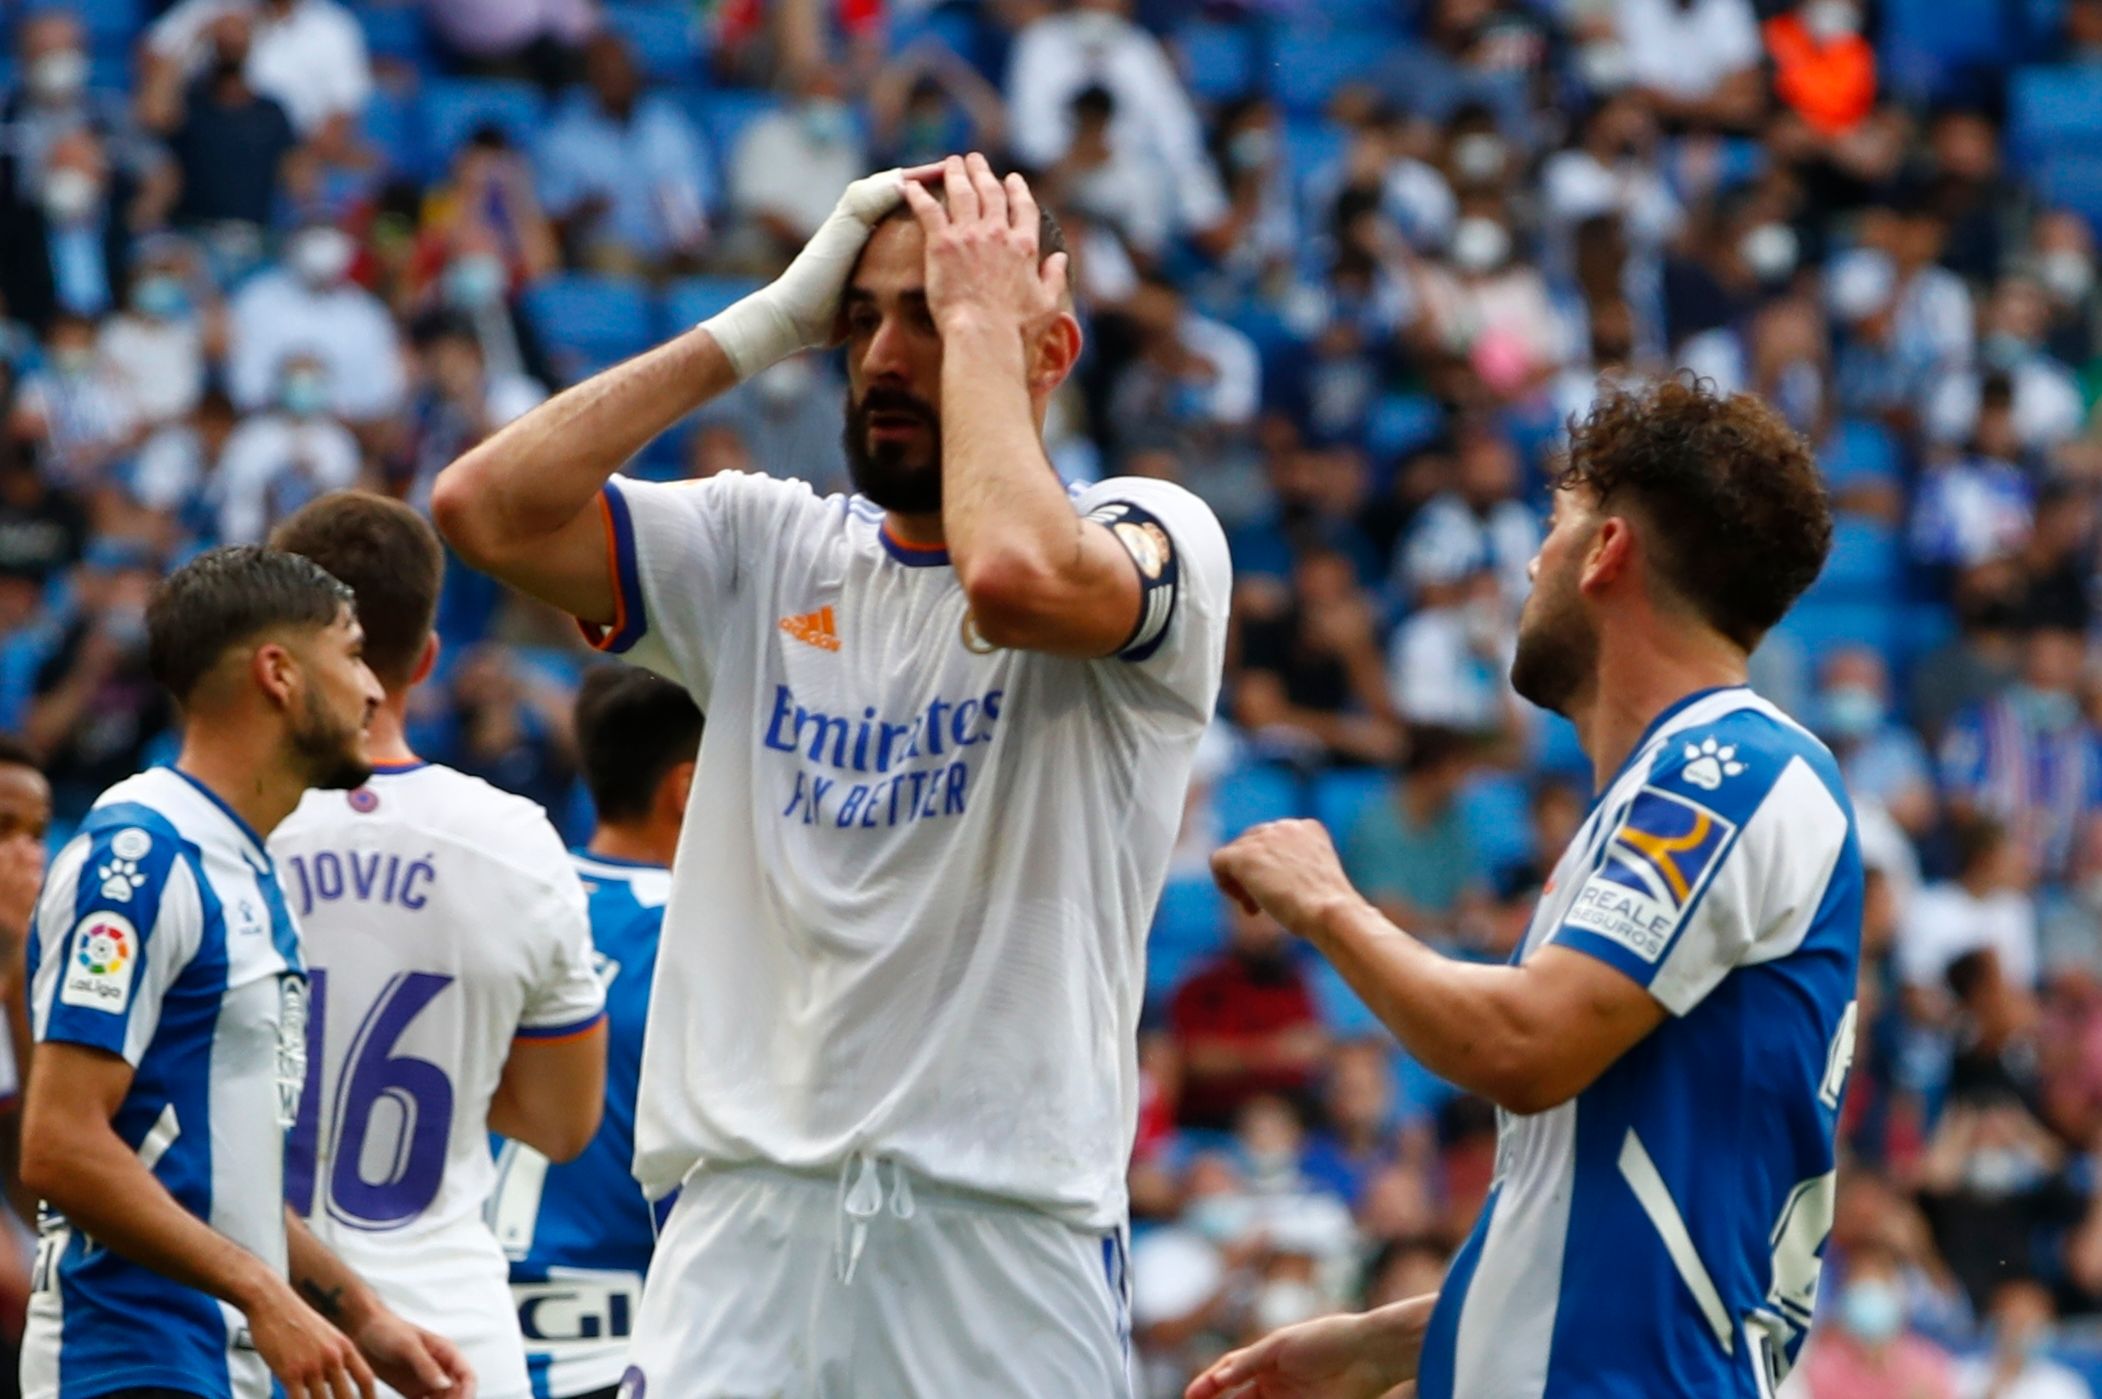 La Liga: Espanyol ends Real Madrid’s 25-game unbeaten streak in the league